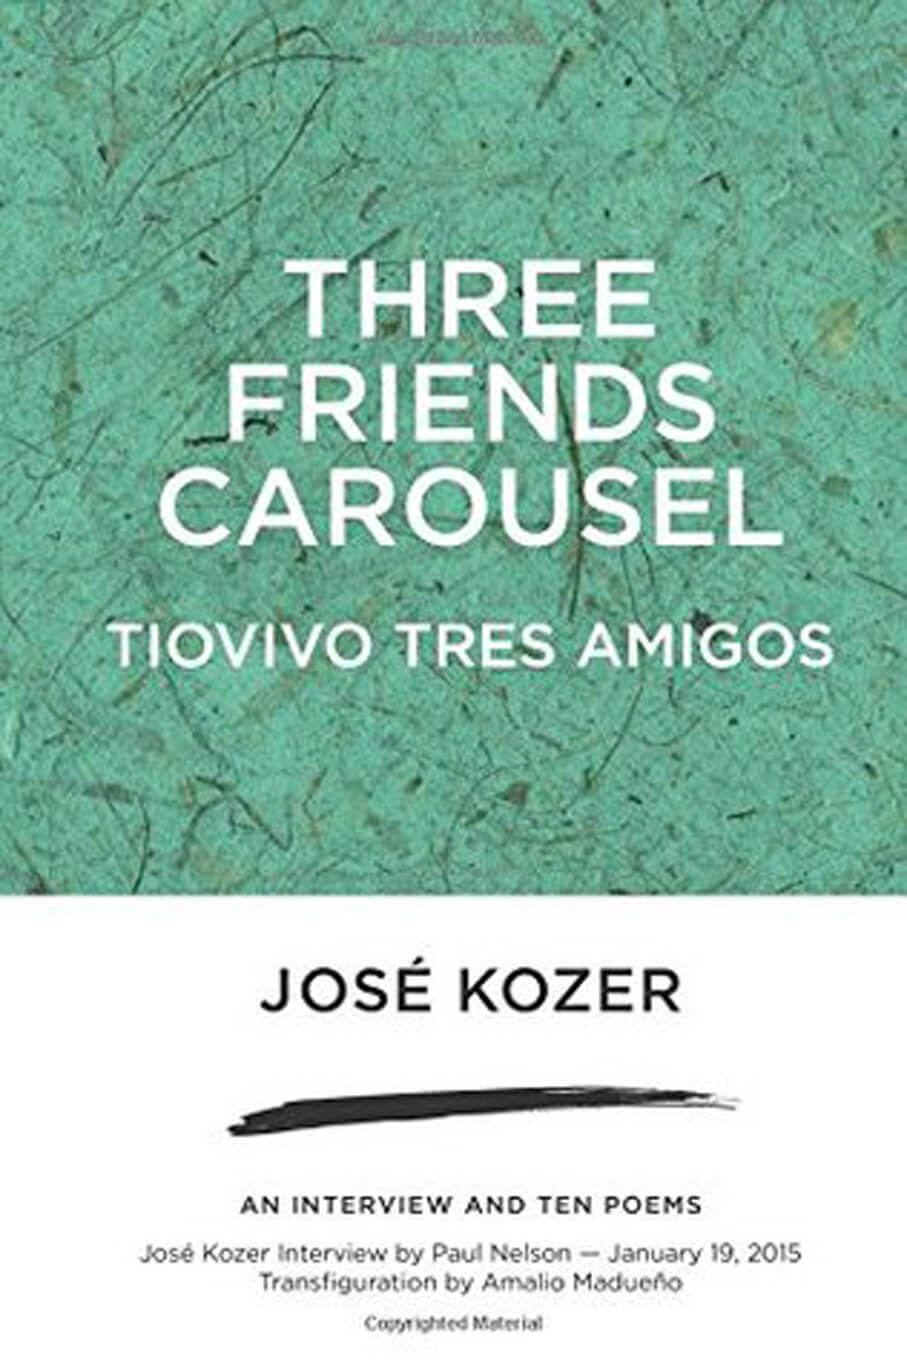 Three Friends Carousel